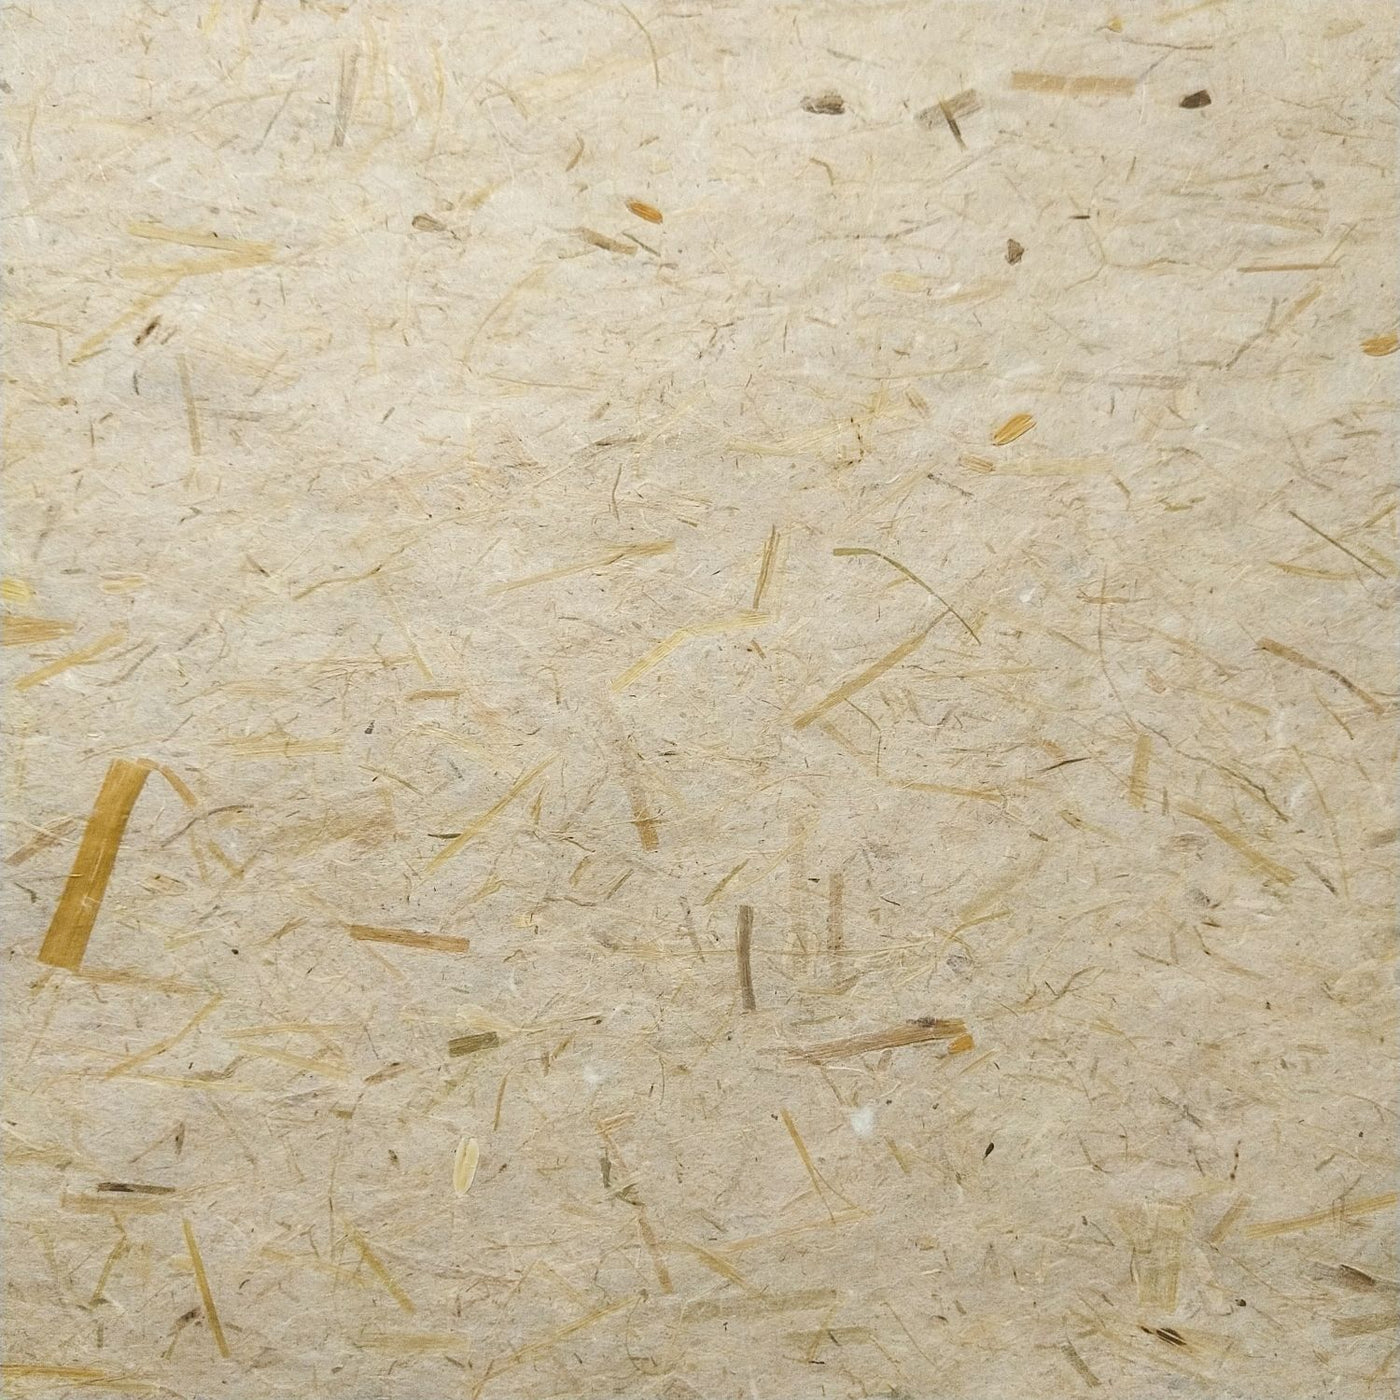 Rice Straw Kozo Paper Mulberry Paper by Kozo Studio